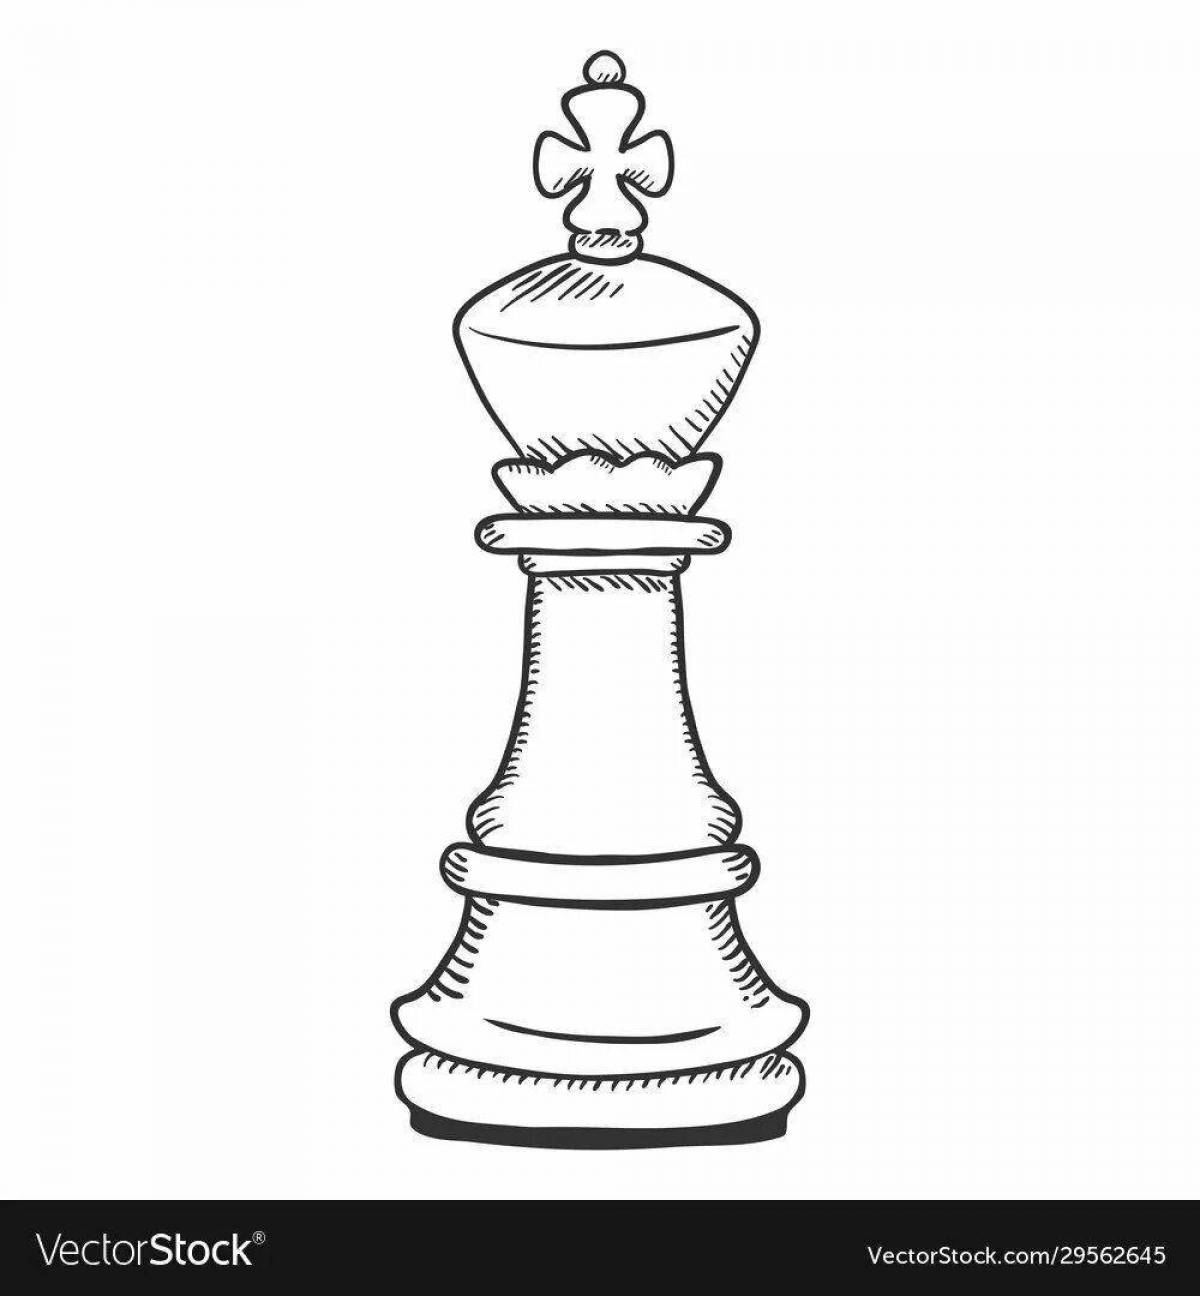 Chess king #7